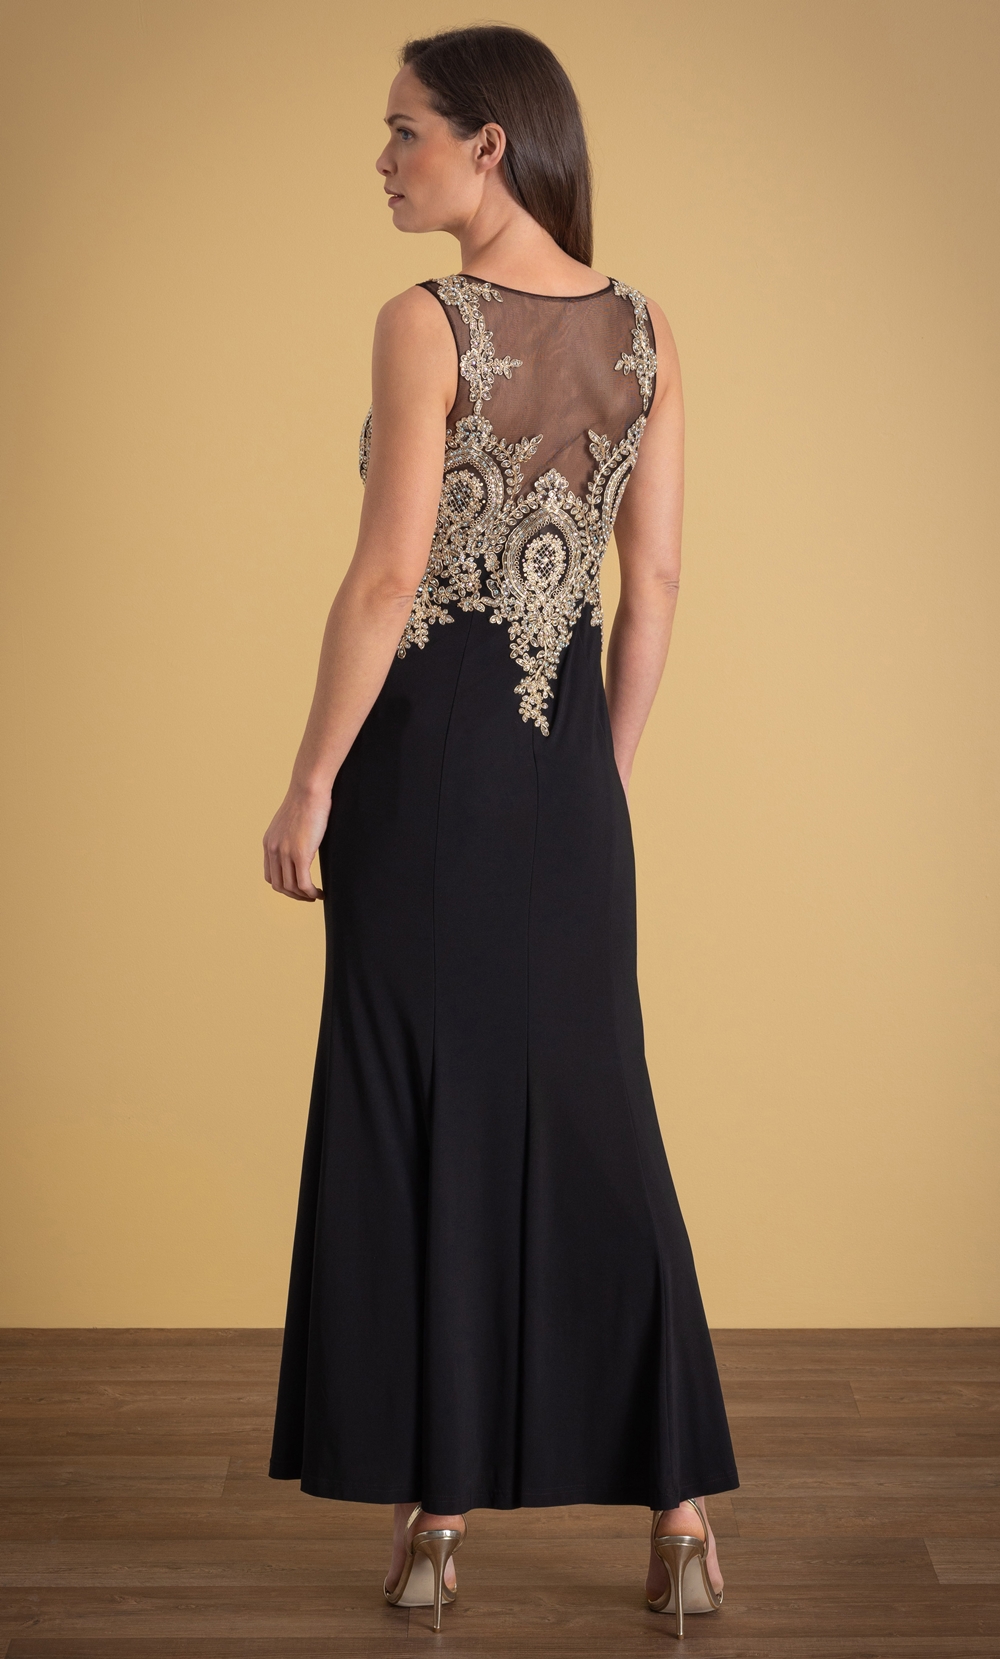 ZZSRJ Evening Dress Black Thin Straps Party Dress Tulle Party Long Dress  Elegant (Color : 4, US Size : 7.5 UK) : Amazon.co.uk: Fashion